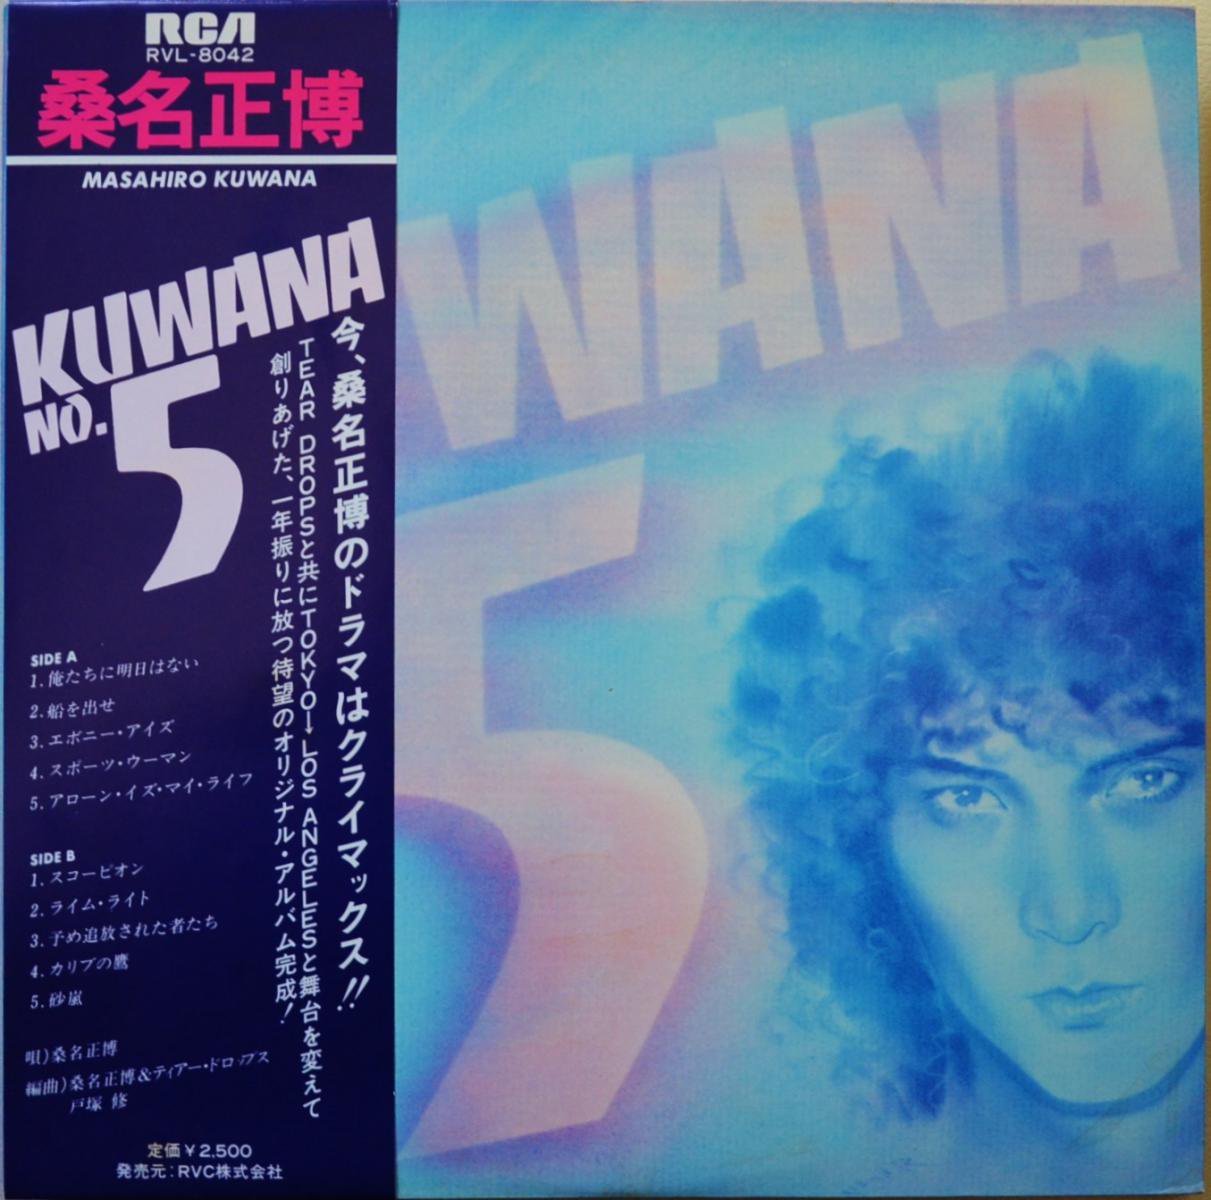 桑名正博 MASAHIRO KUWANA / KUWANA NO.5 (LP) - HIP TANK RECORDS